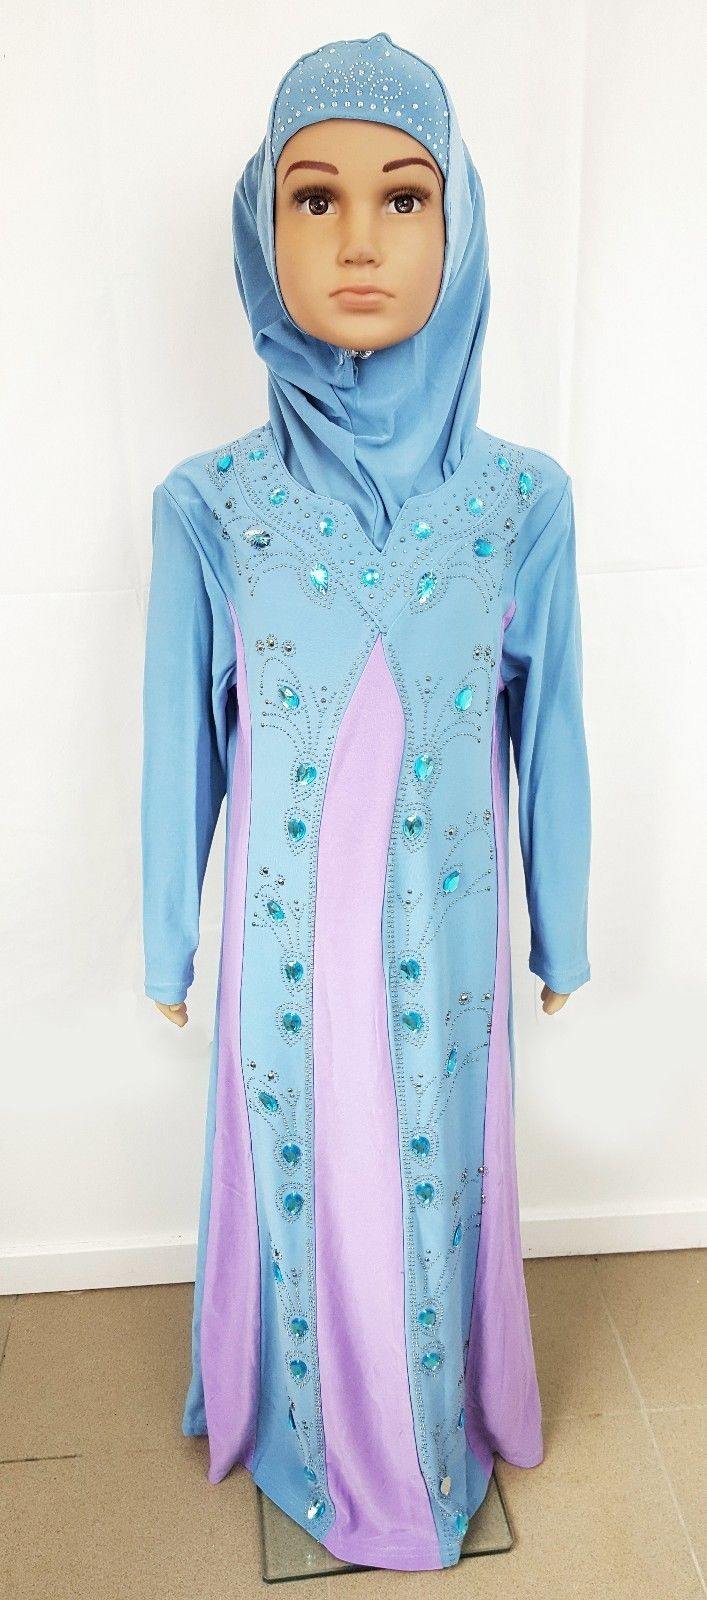 Girls Muslim Dress Kids Long Sleeve Abaya 2-12T - Arabian Shopping Zone